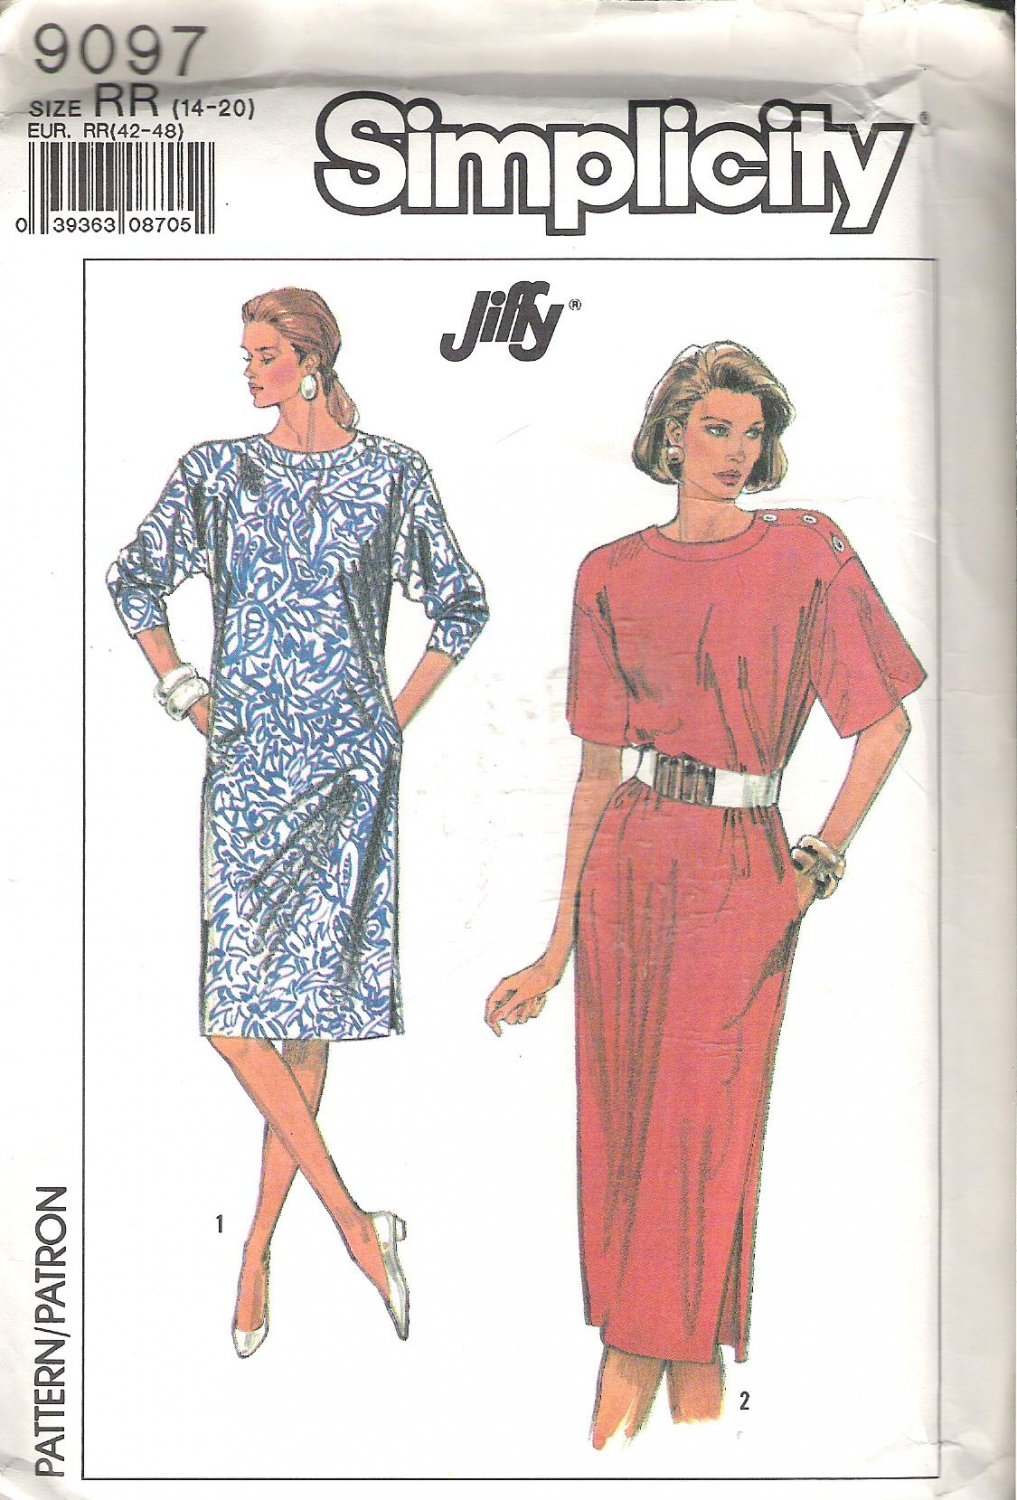 Simplicity 9097 (1989) Pattern Dress in Two Lengths Size 14-20 (Plus) Uncut